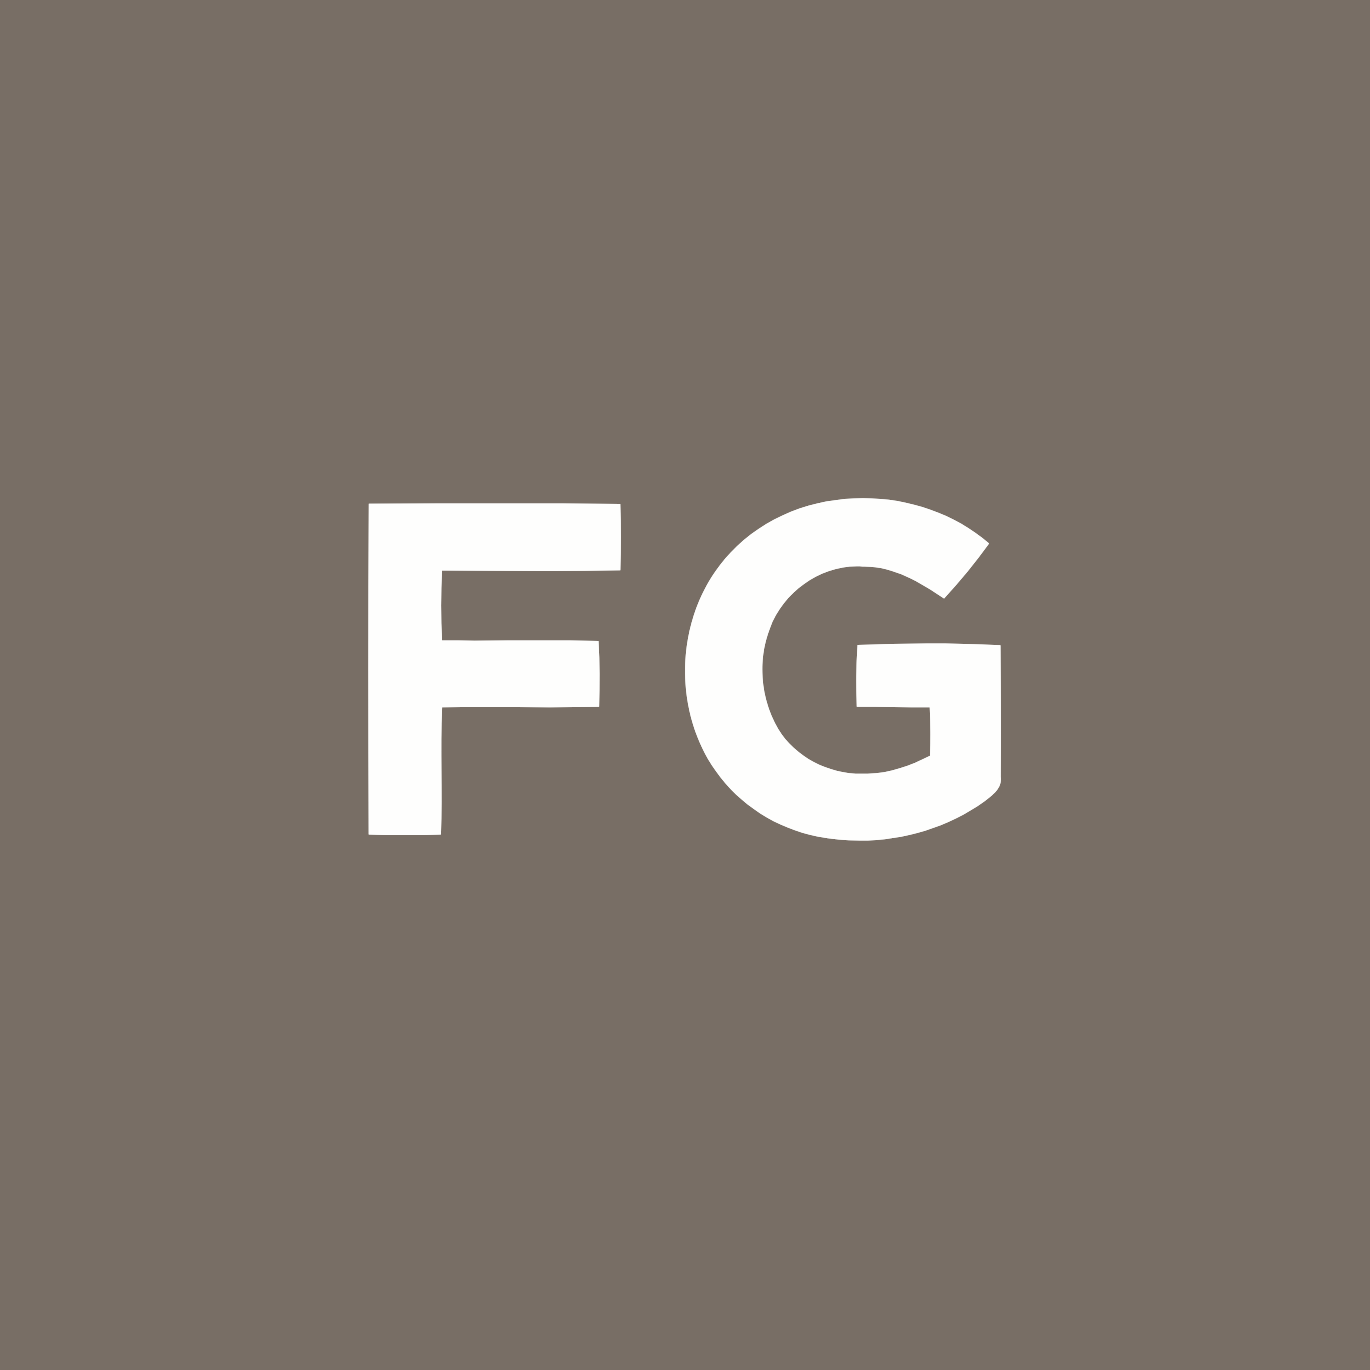 Fossil Group logo (transparent PNG)